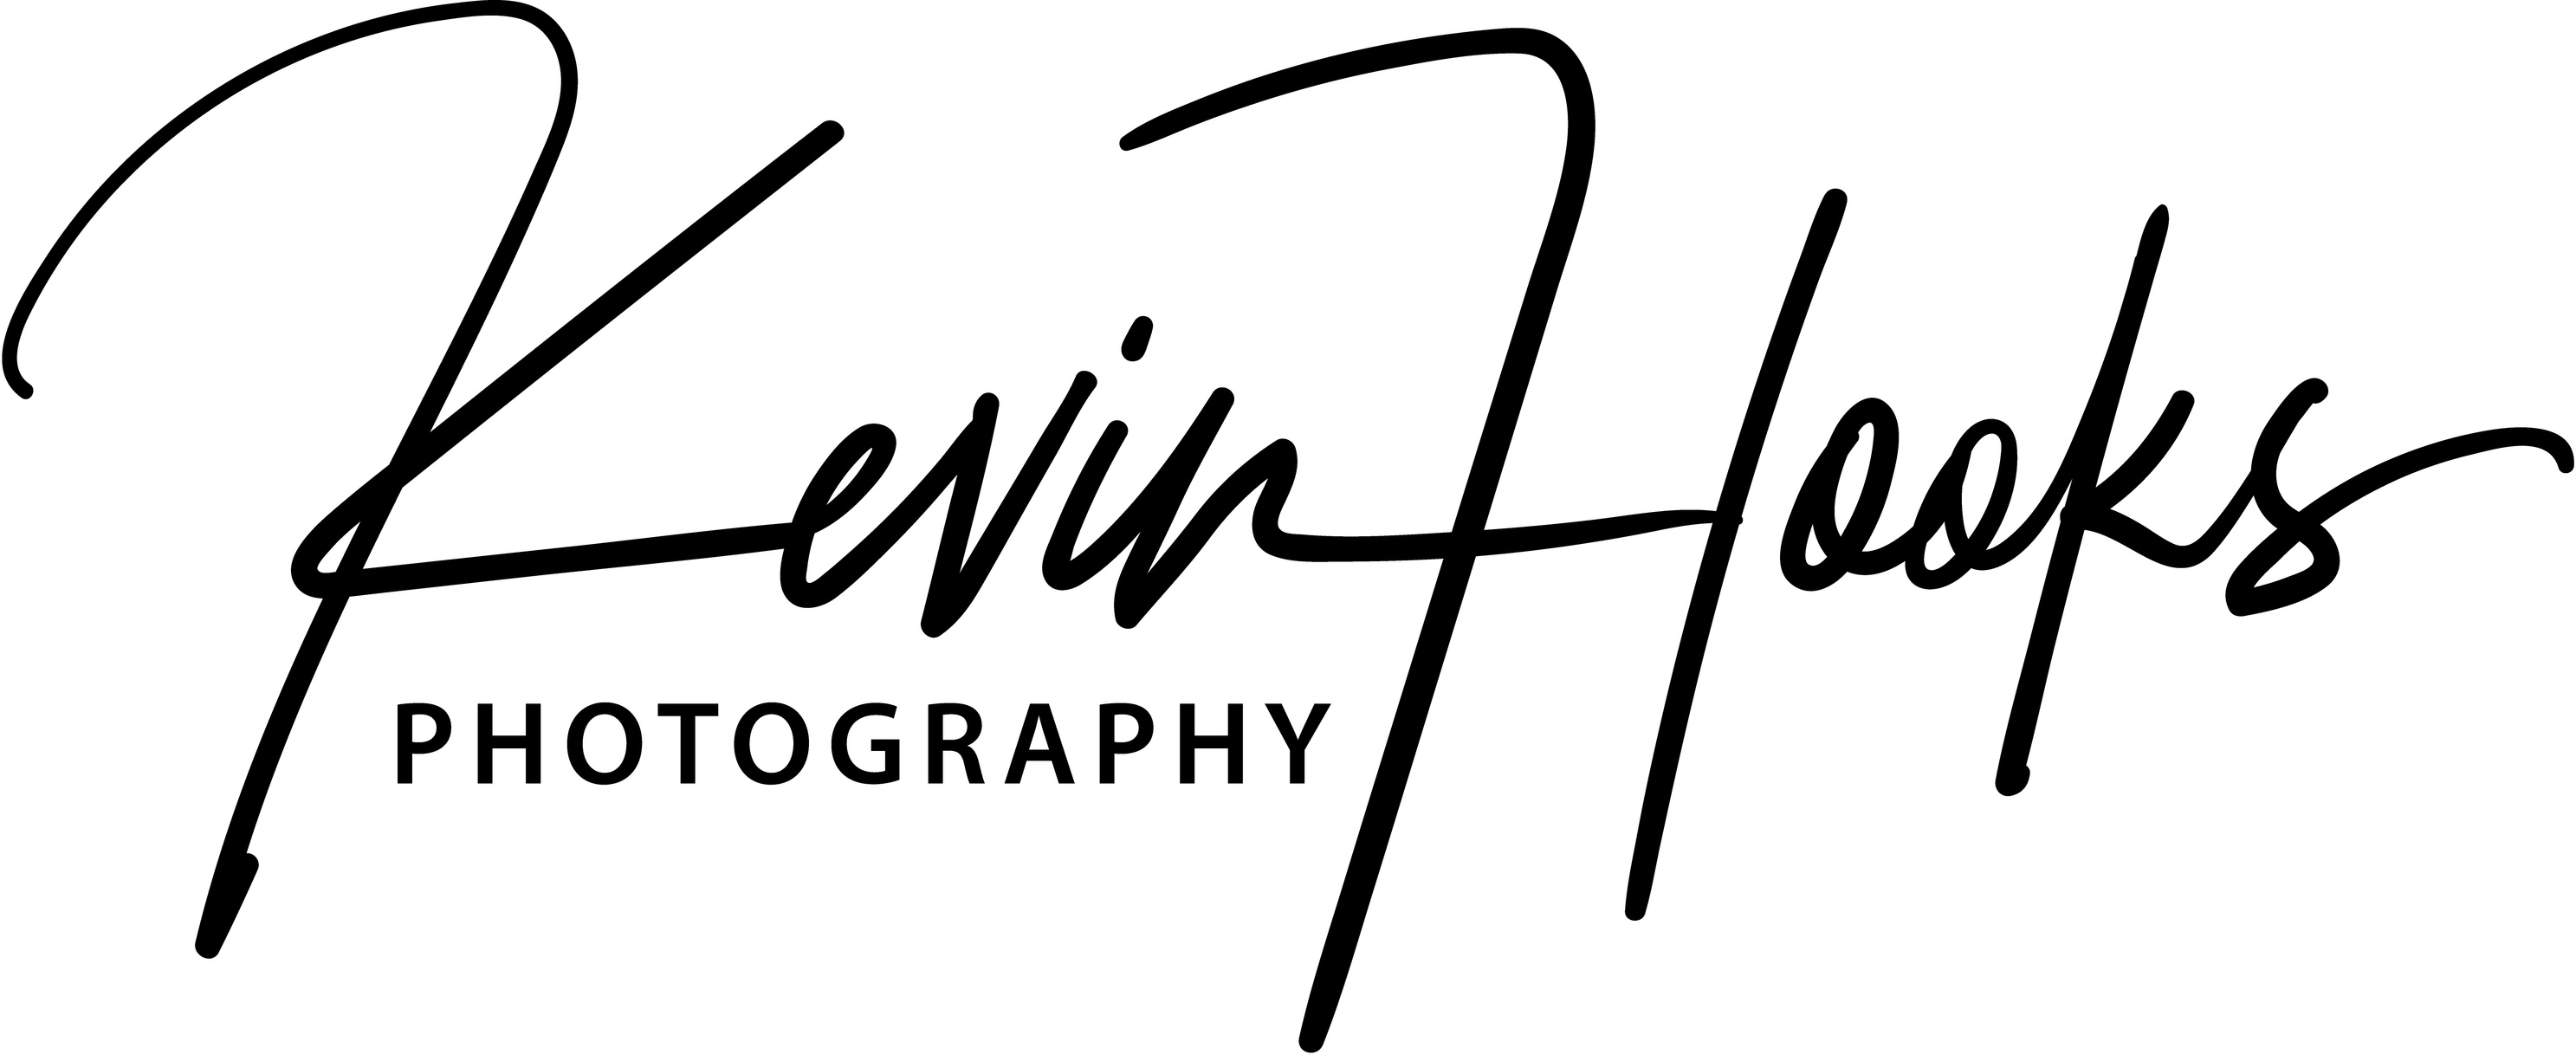 Kevin Hooks Photography